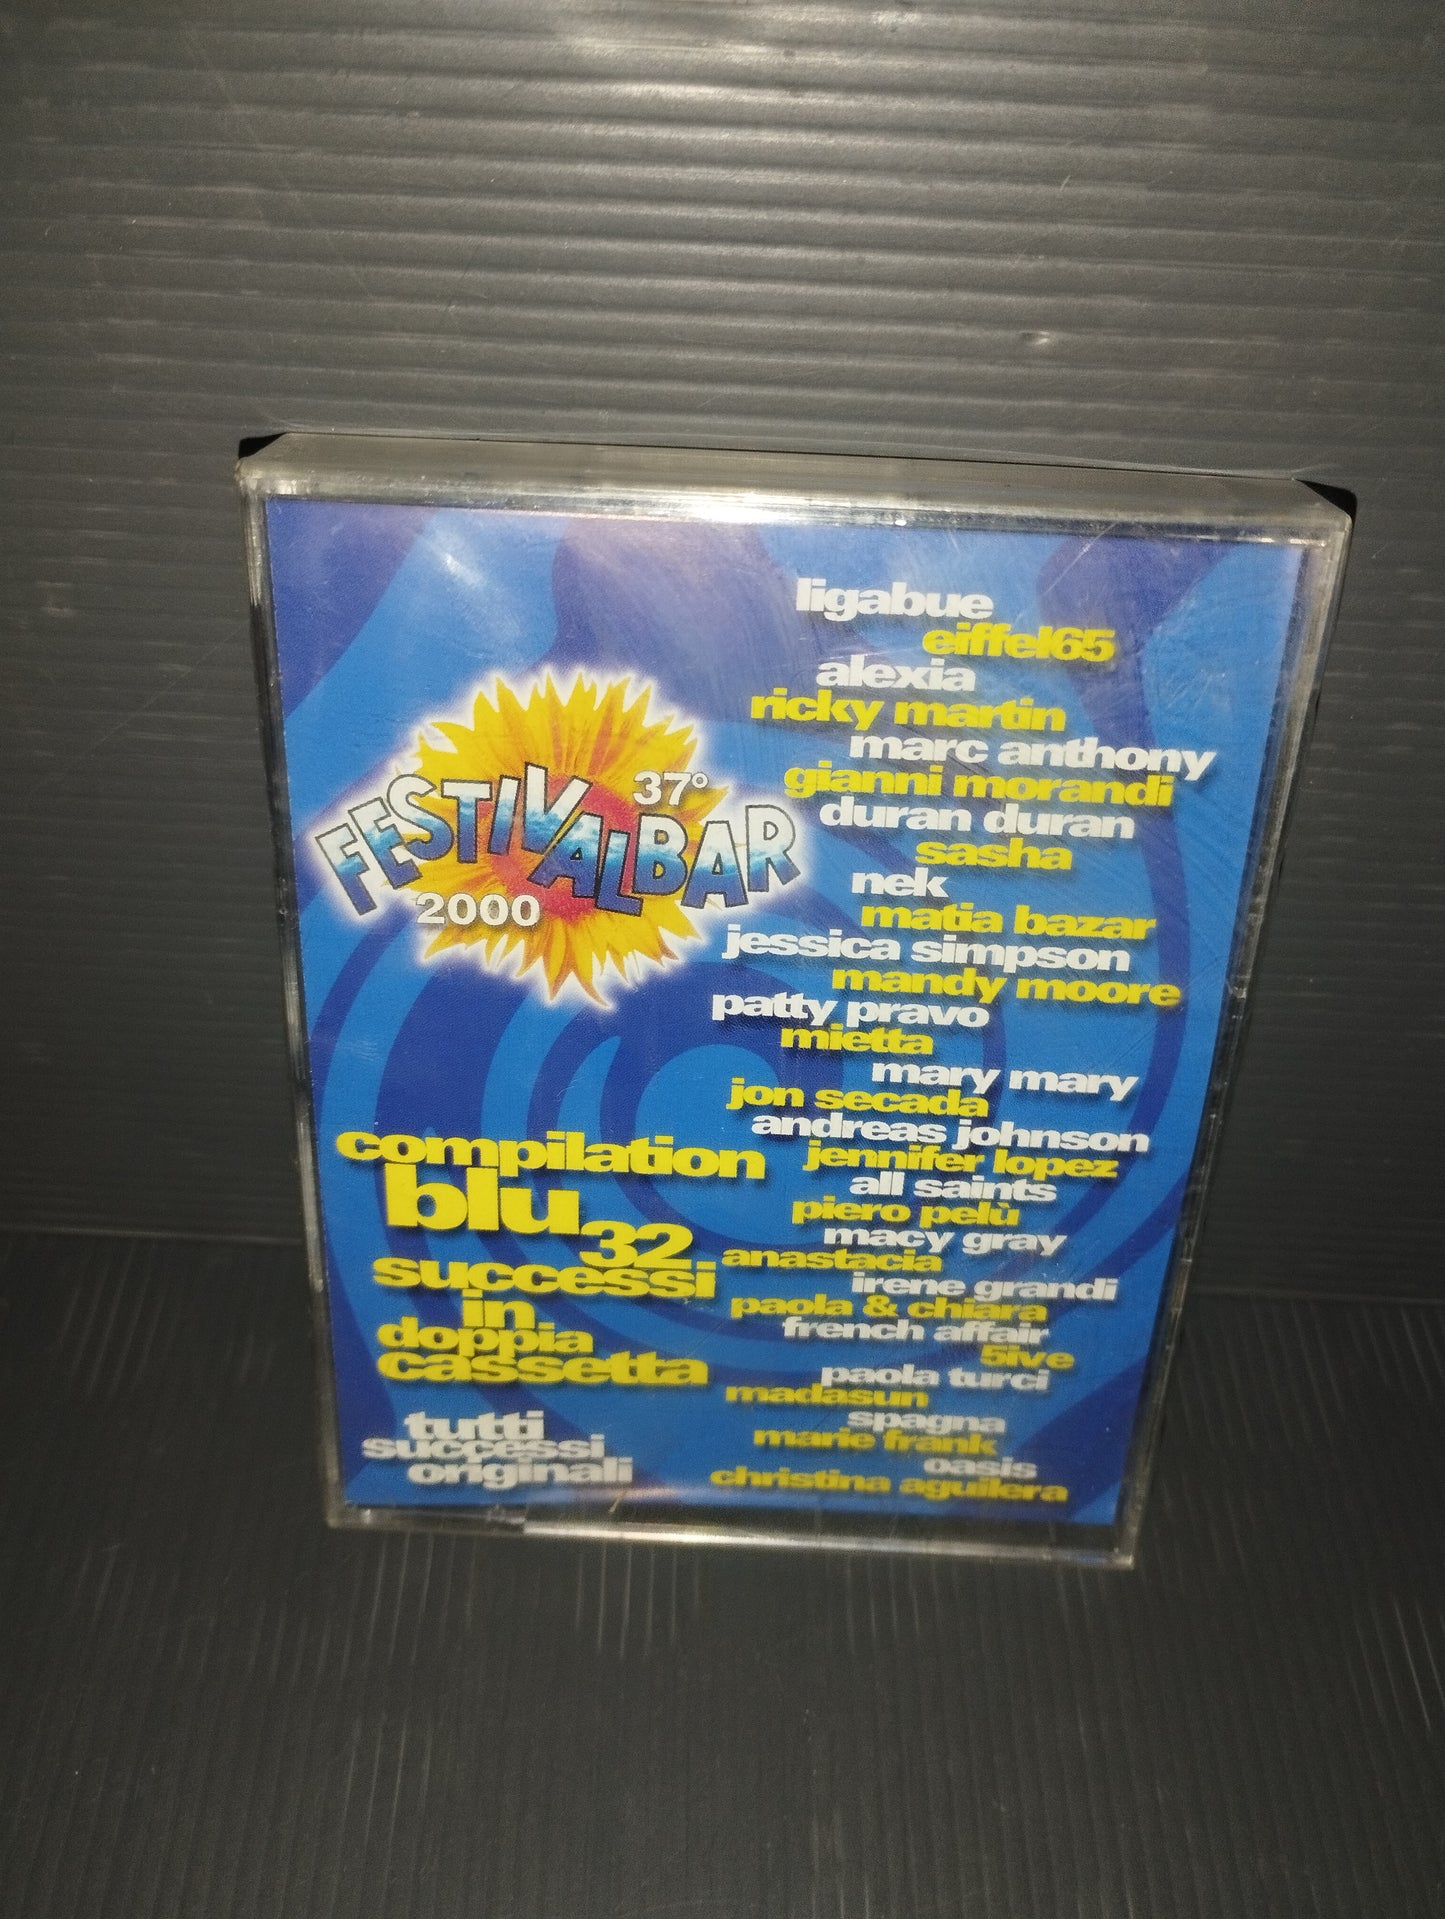 37th Festivalbar 2000 Blue compilation 2 cassettes